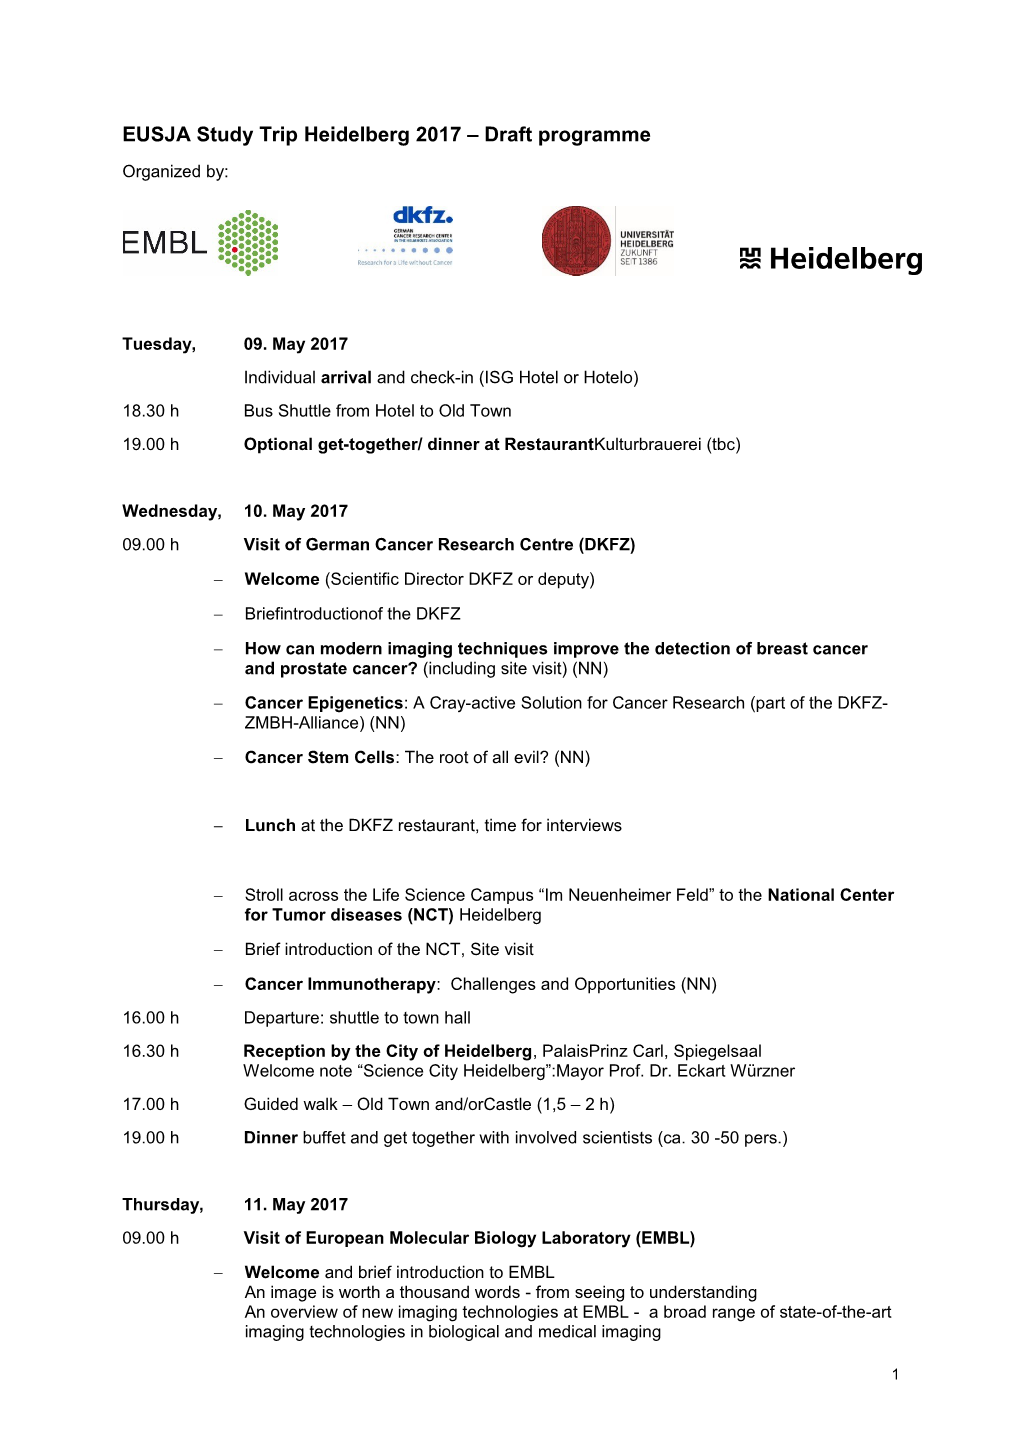 EUSJA Study Trip Heidelberg 2017 Draft Programme